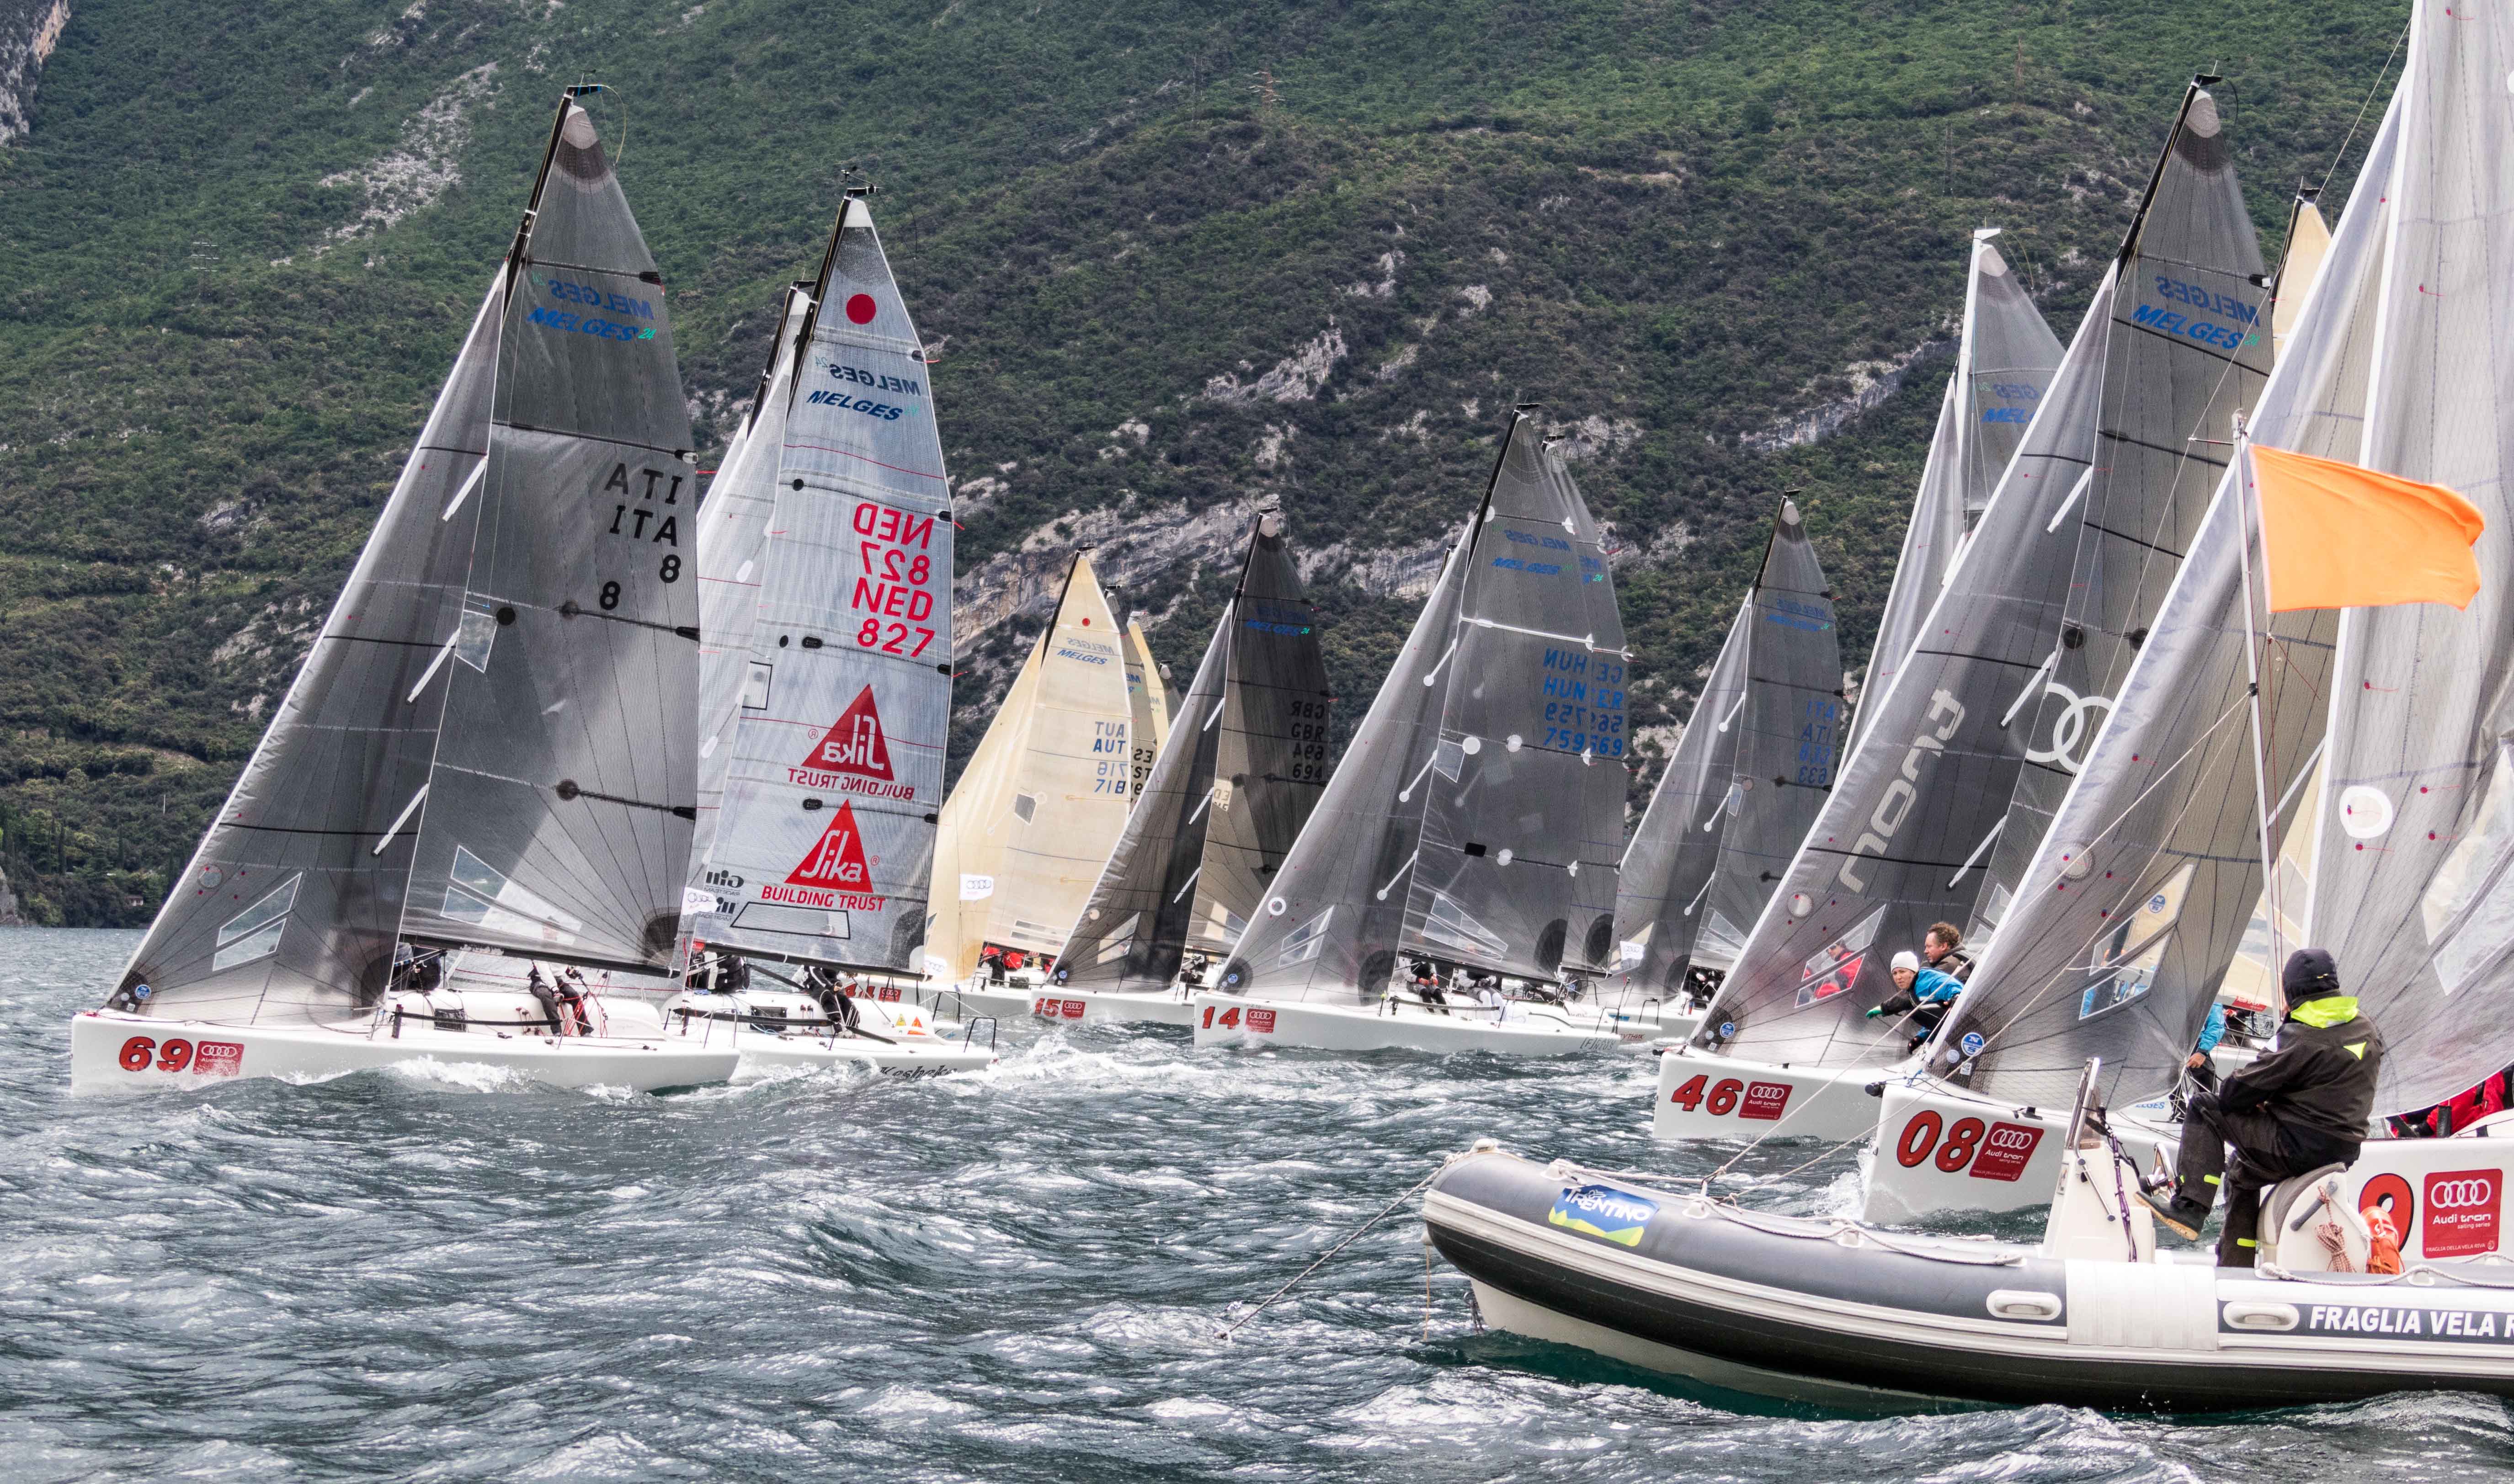  Melges 24  European Sailing Series/Swiss Championship 2016  Luino ITA  Final results